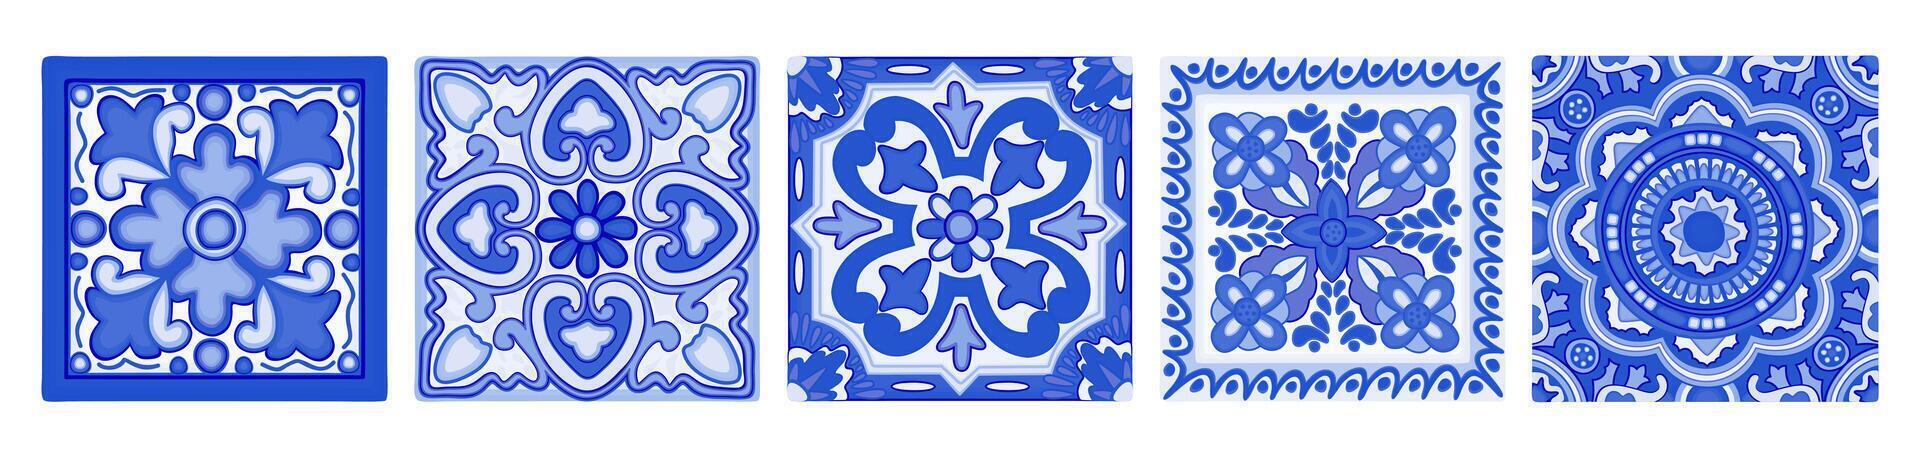 Mediterrâneo azulejos. azulejo decorativo arte. vetor conjunto isolado em branco fundo